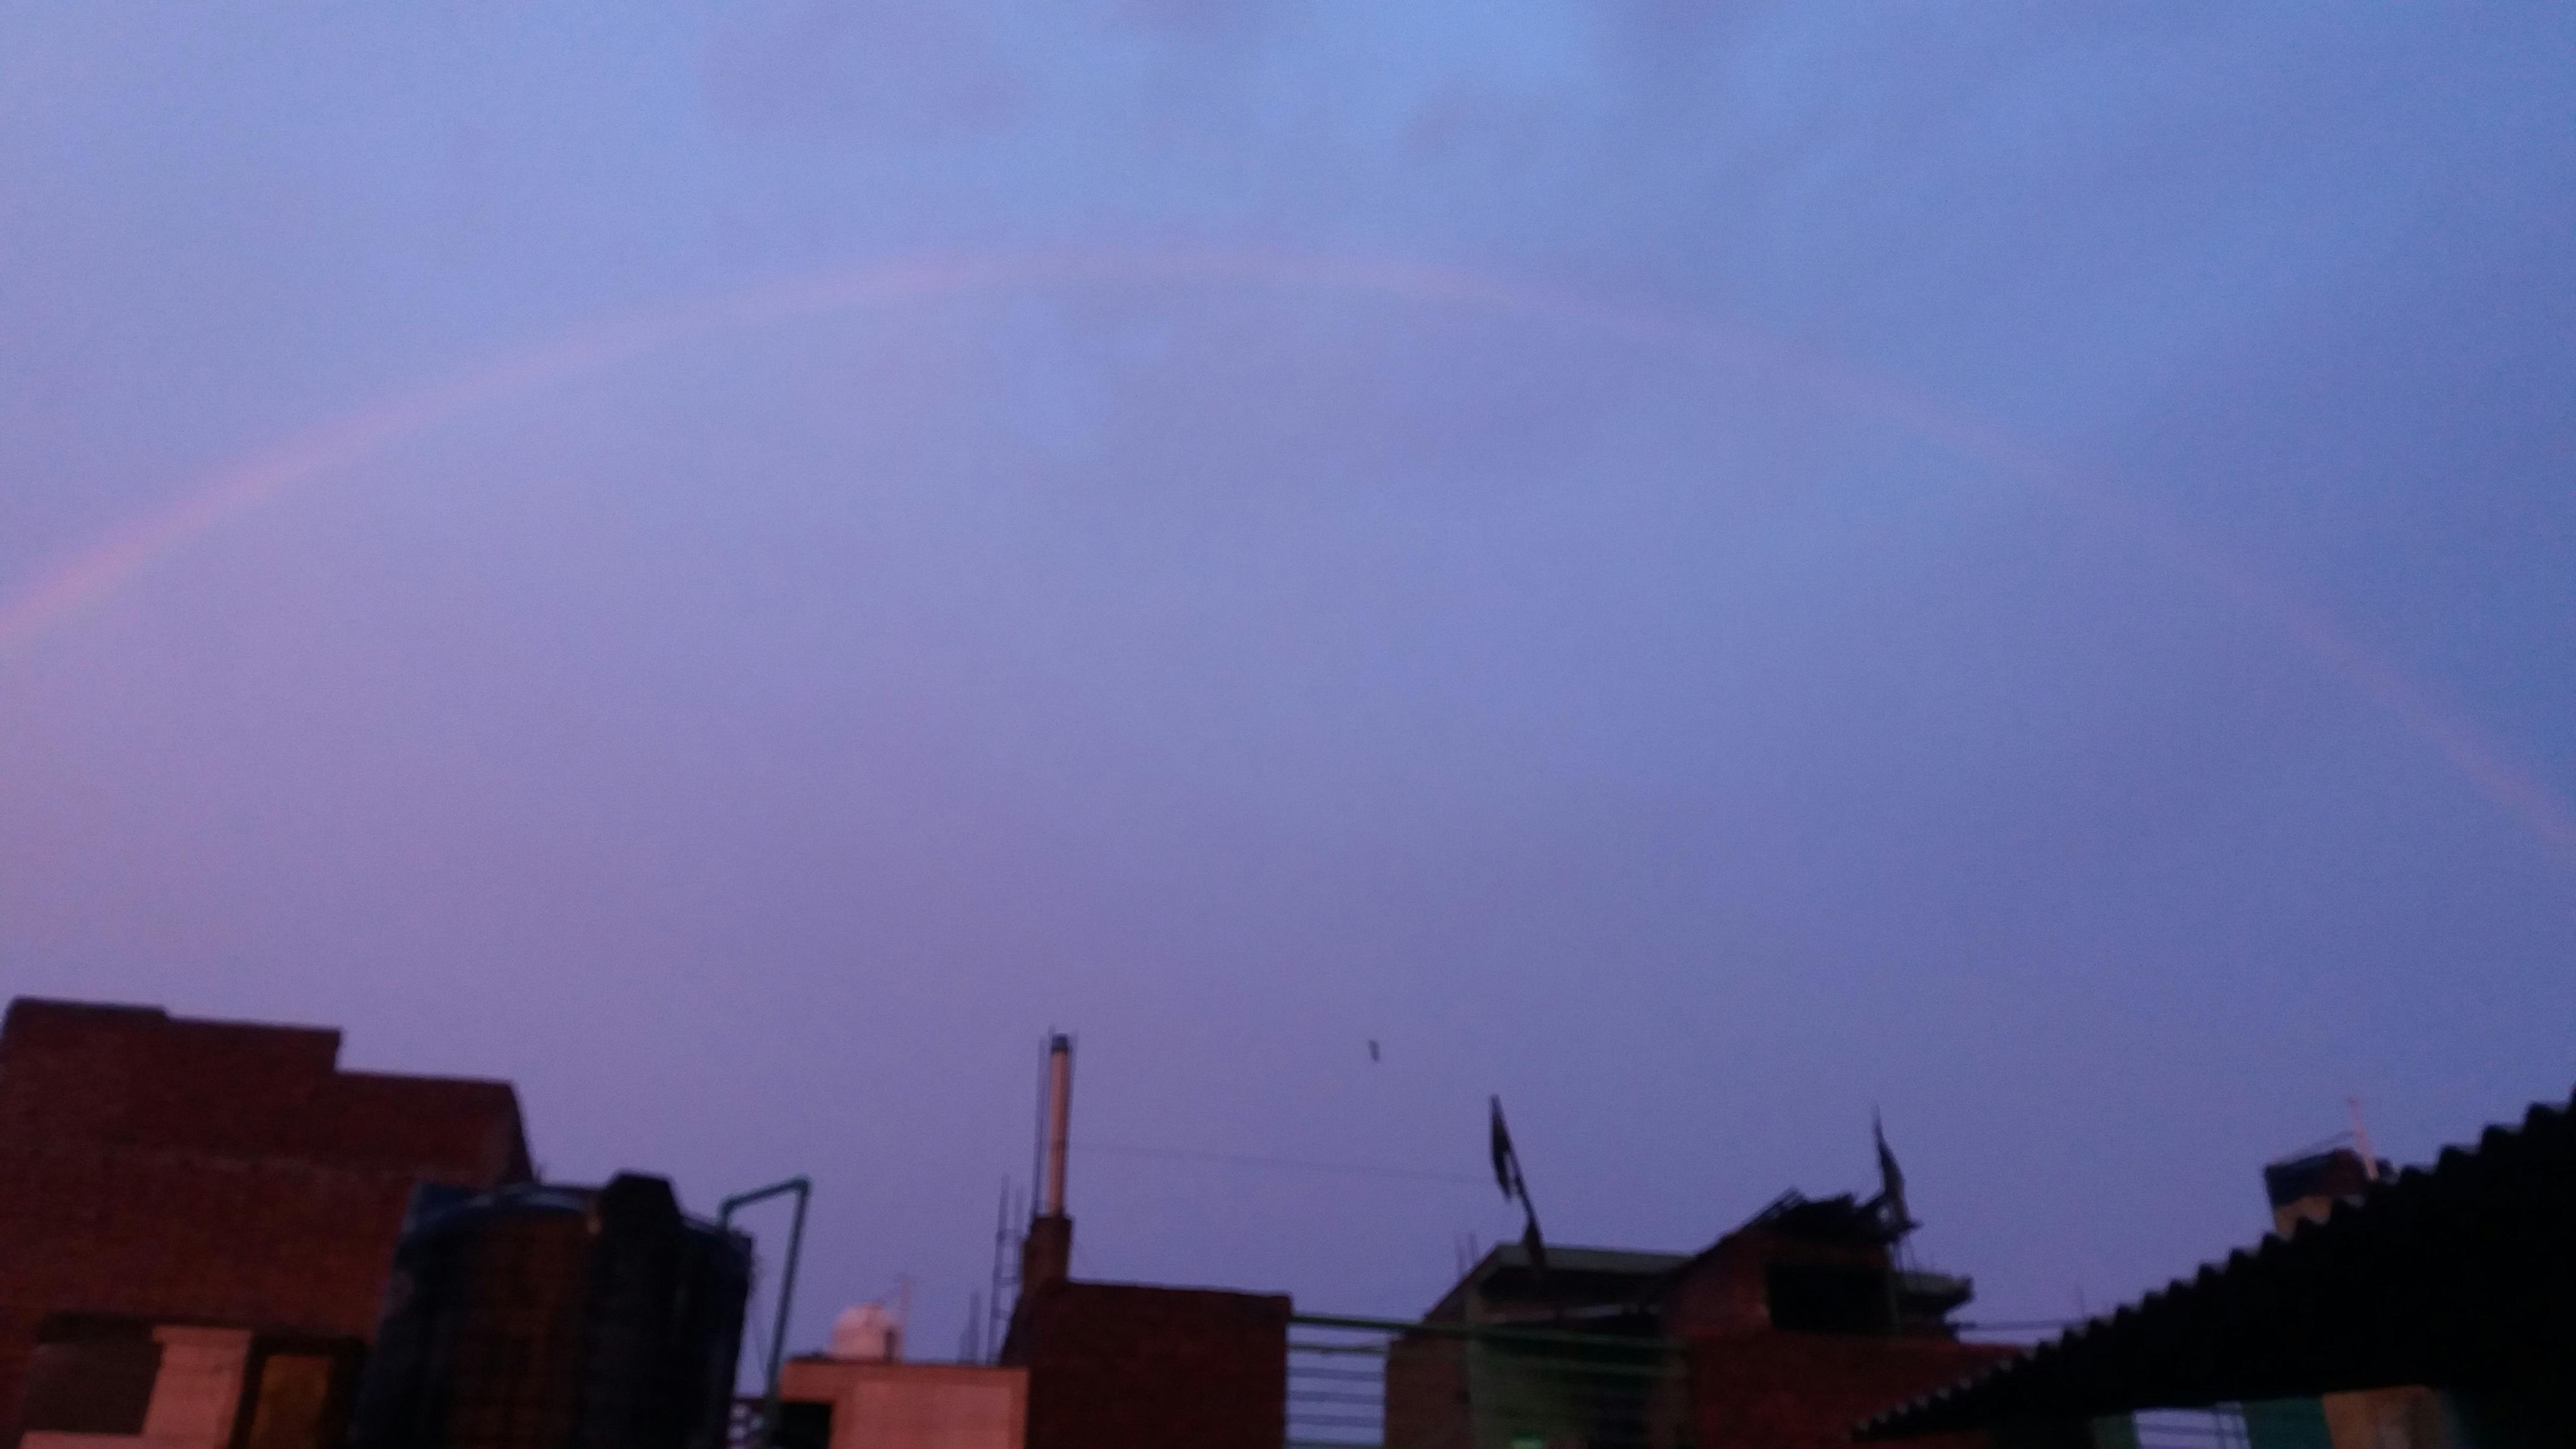 Free stock photo of Amazing light in the sky, Light in sky, rainbow bridge